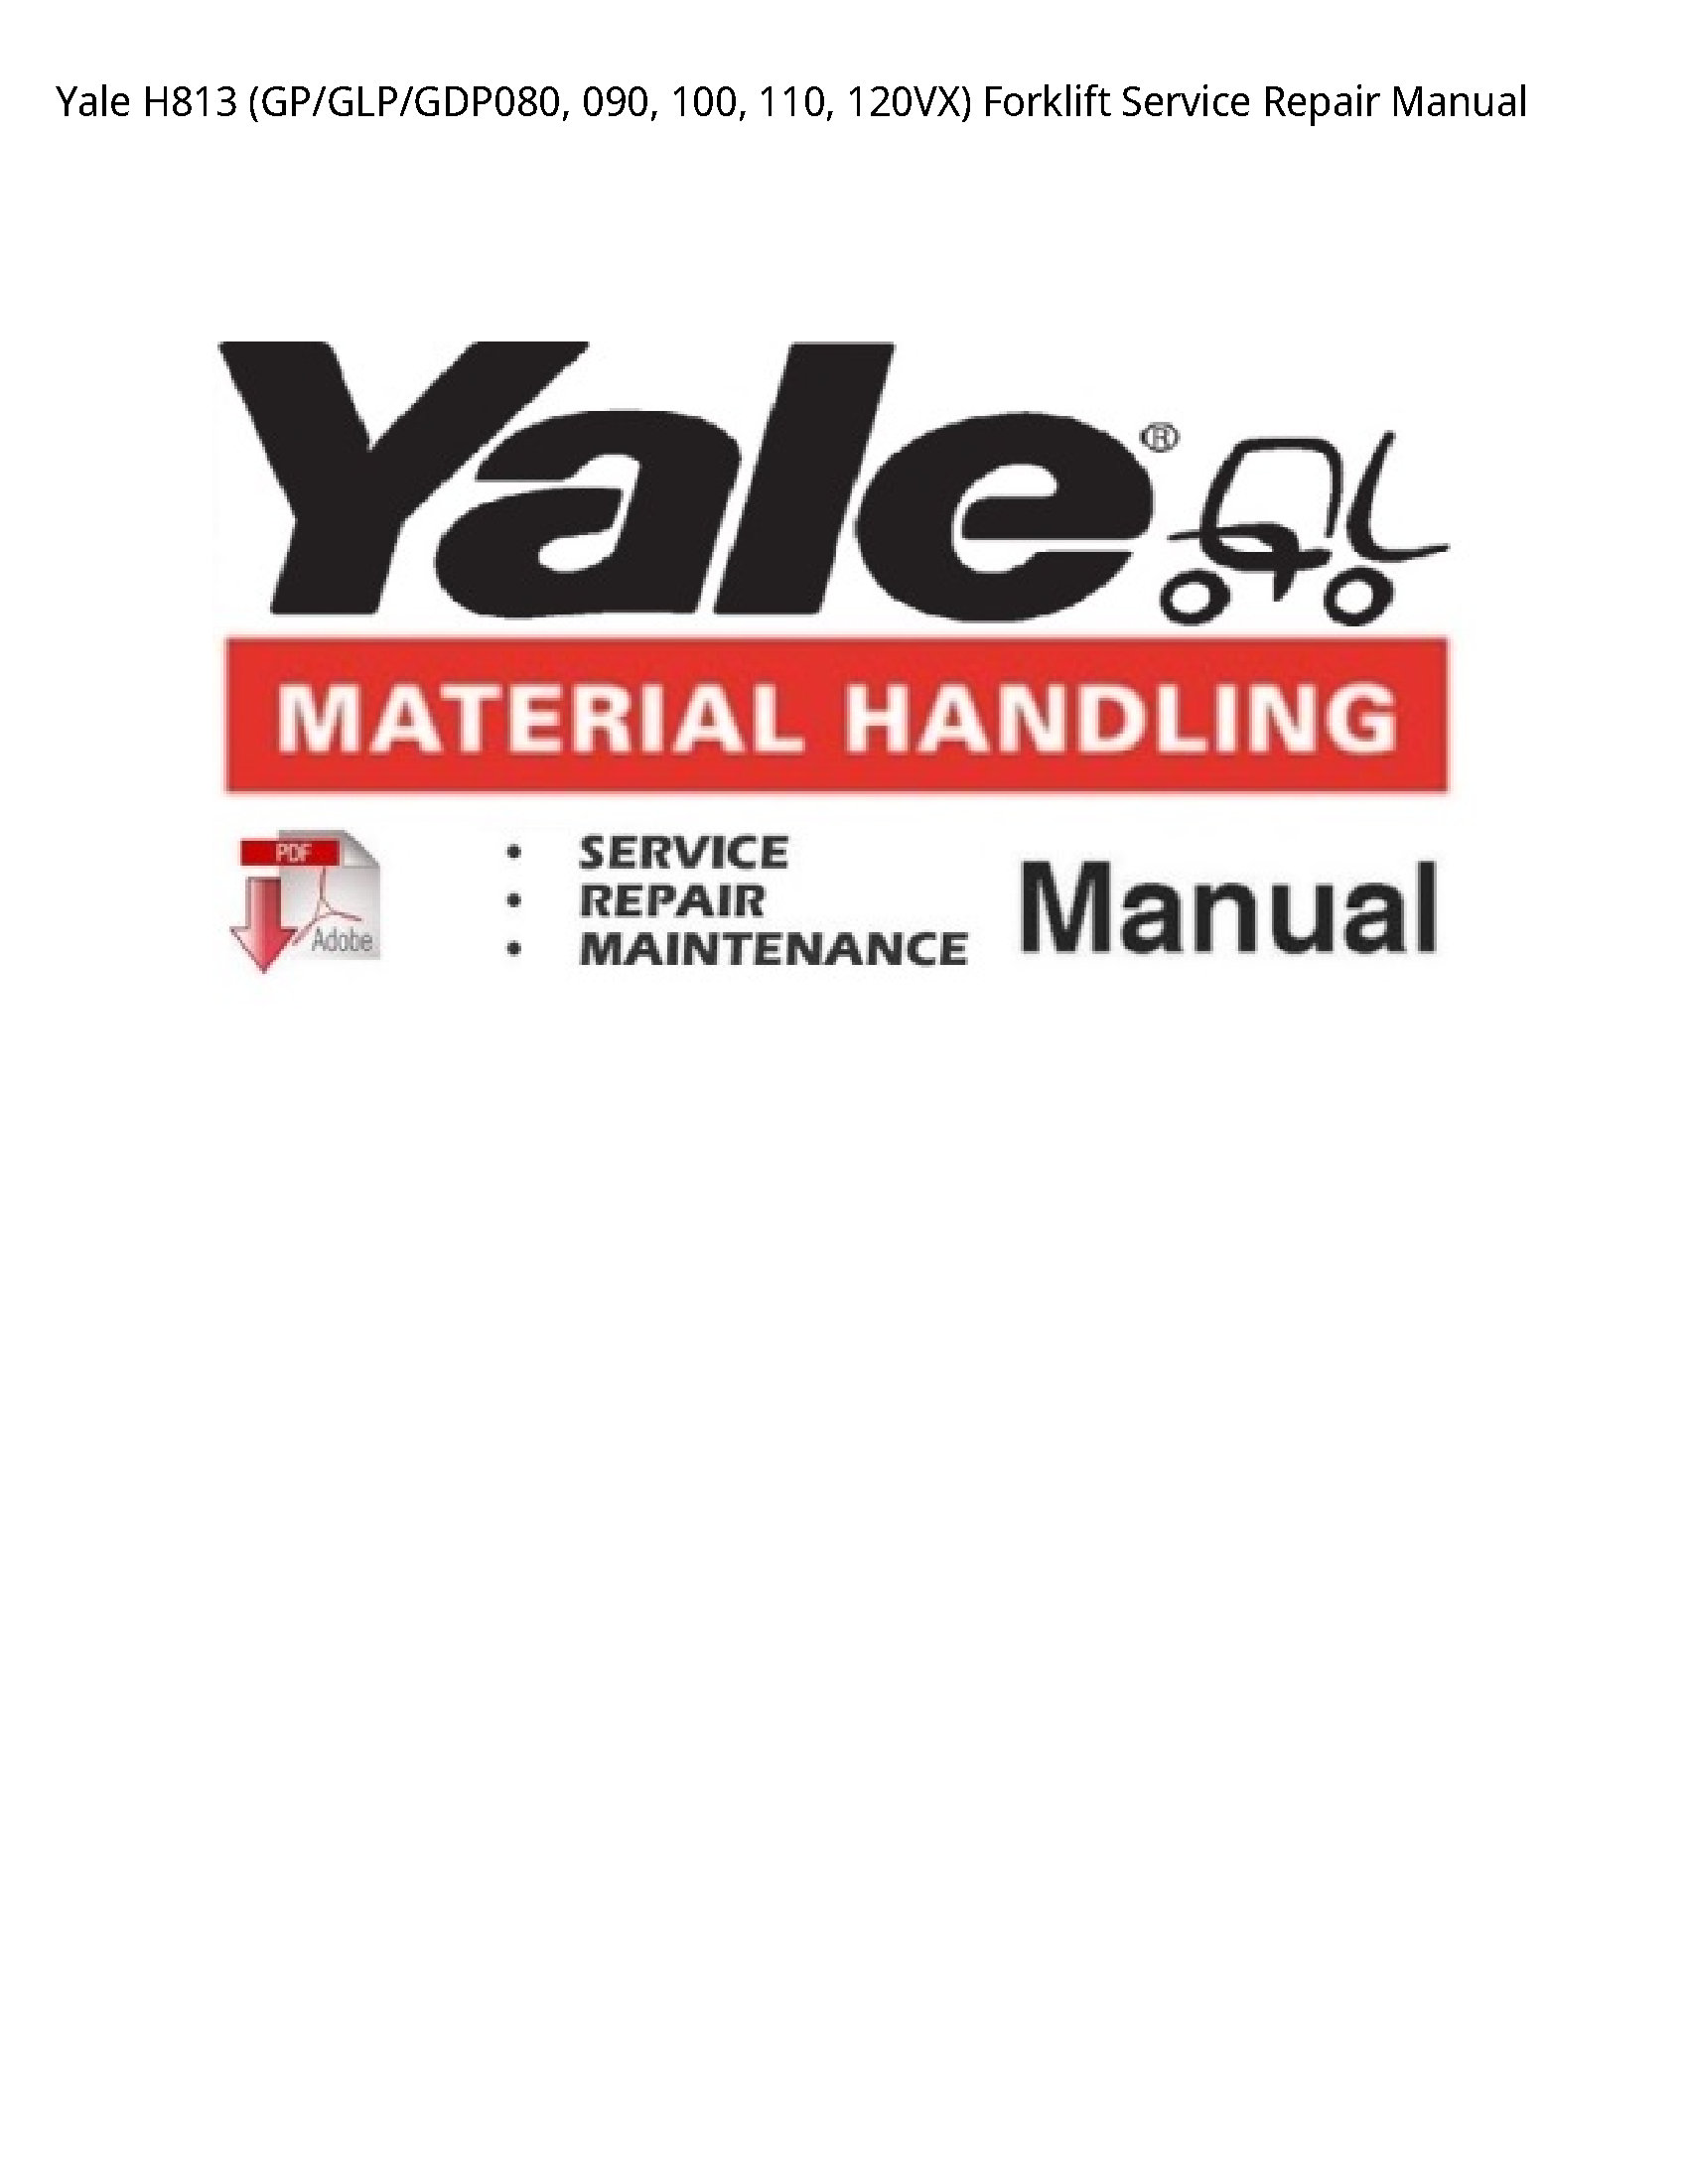 Yale H813 Forklift manual